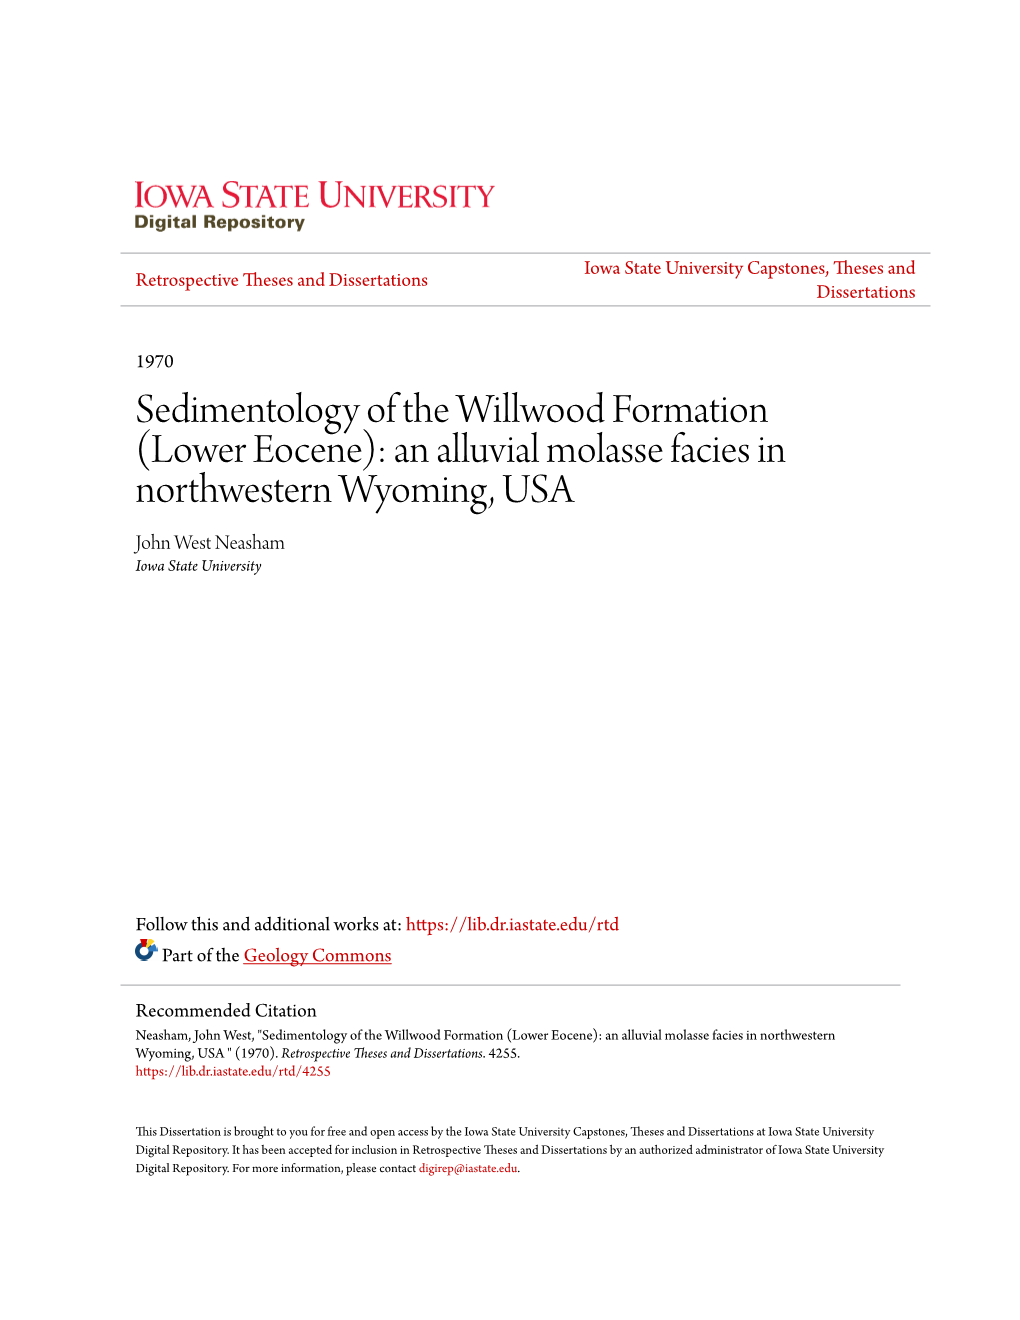 Sedimentology of the Willwood Formation (Lower Eocene): an Alluvial Molasse Facies in Northwestern Wyoming, USA John West Neasham Iowa State University